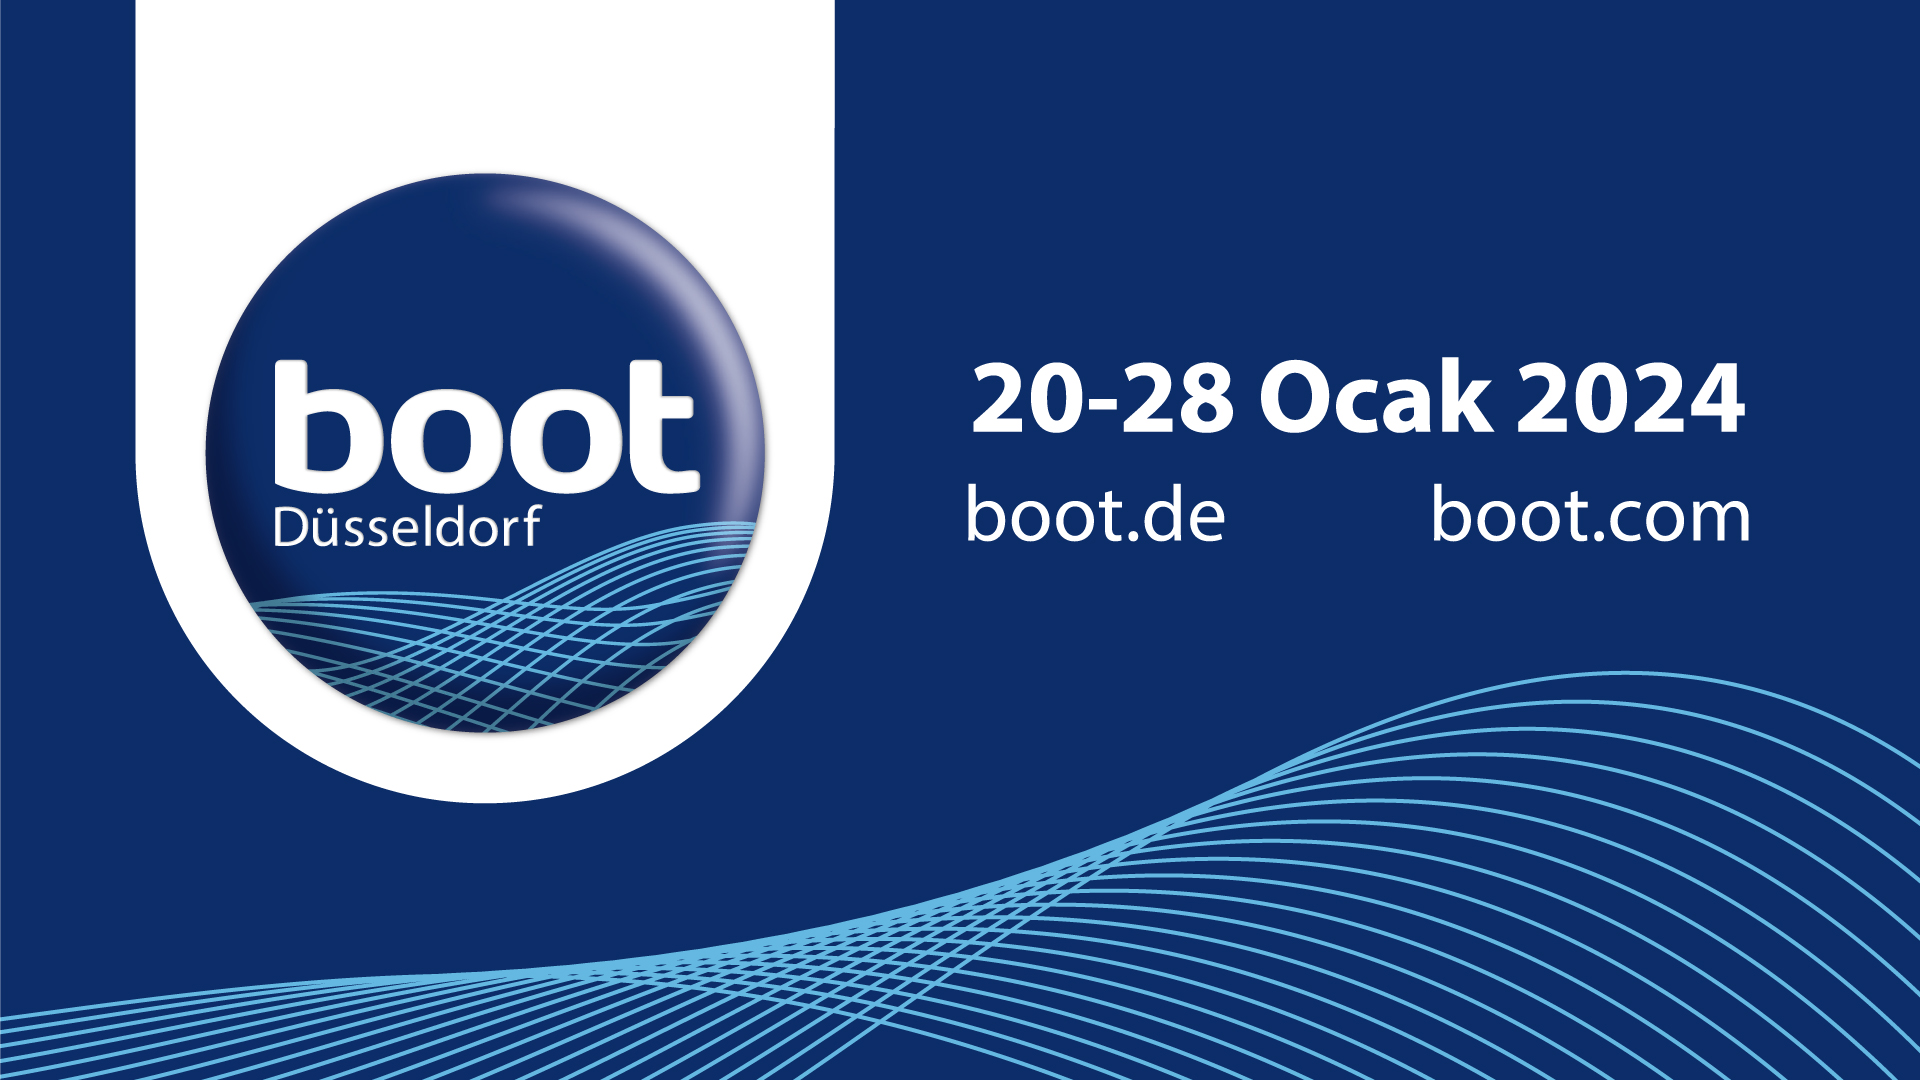 Boot Düsseldorf (20-28 Ocak 2024)